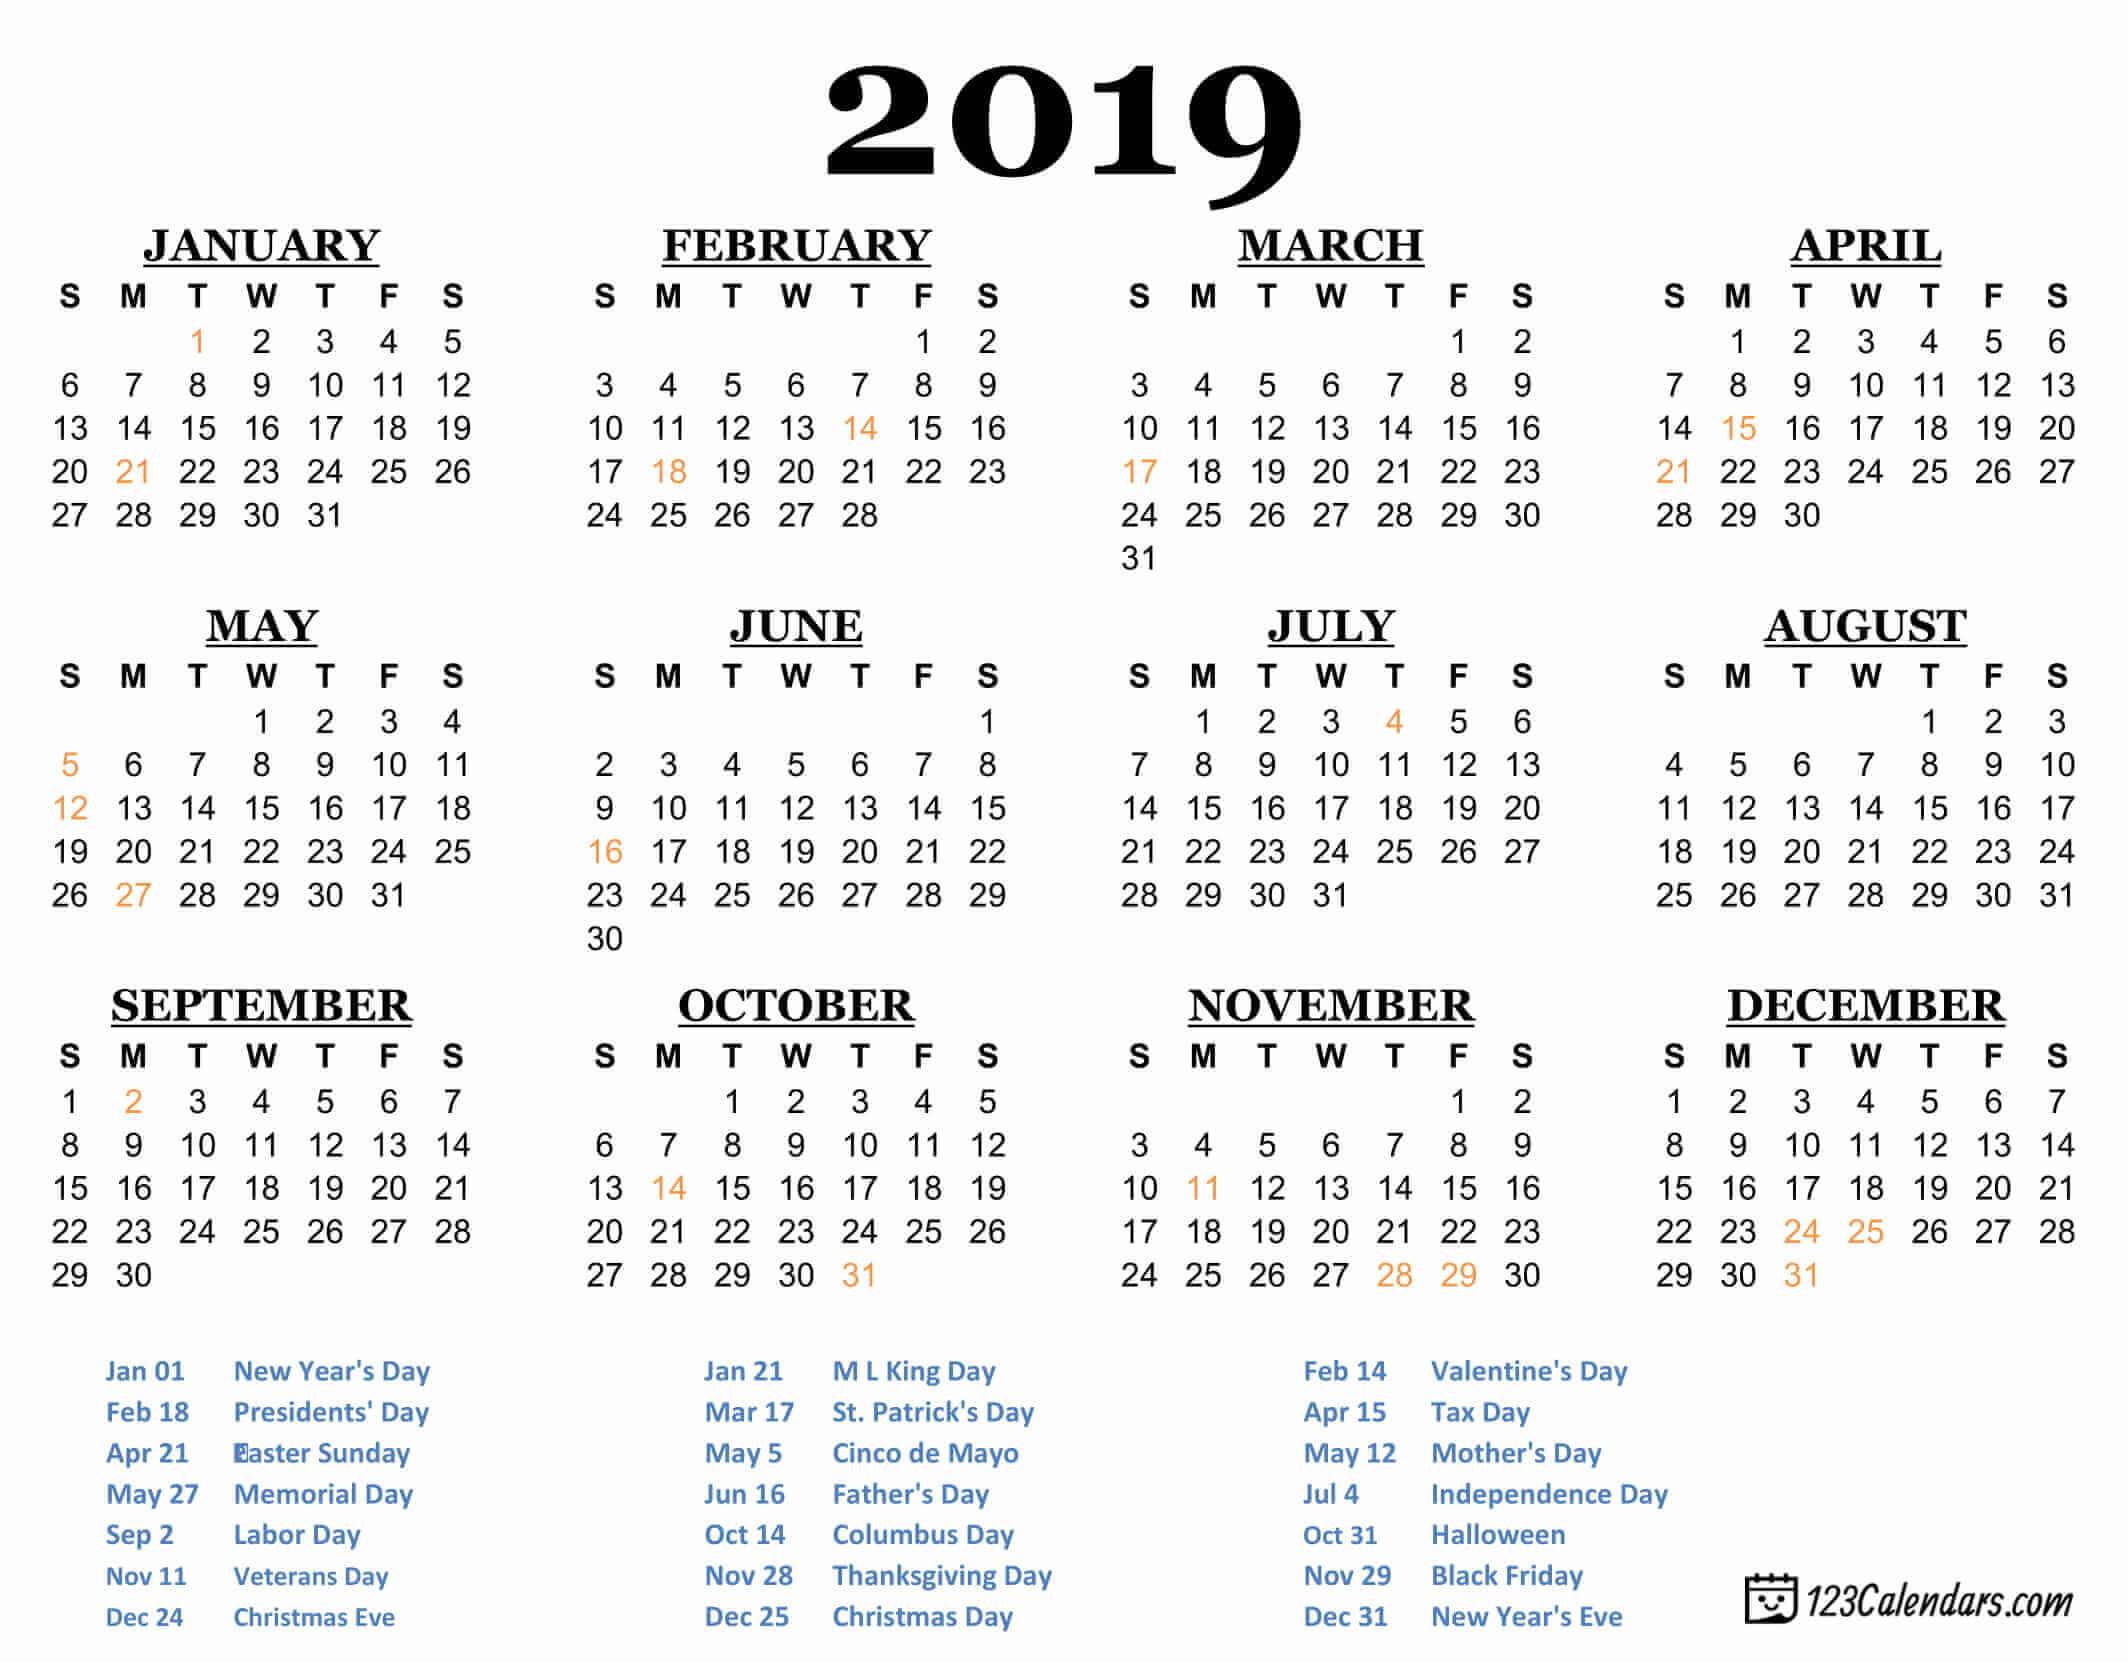 2019 calendar free download for mac